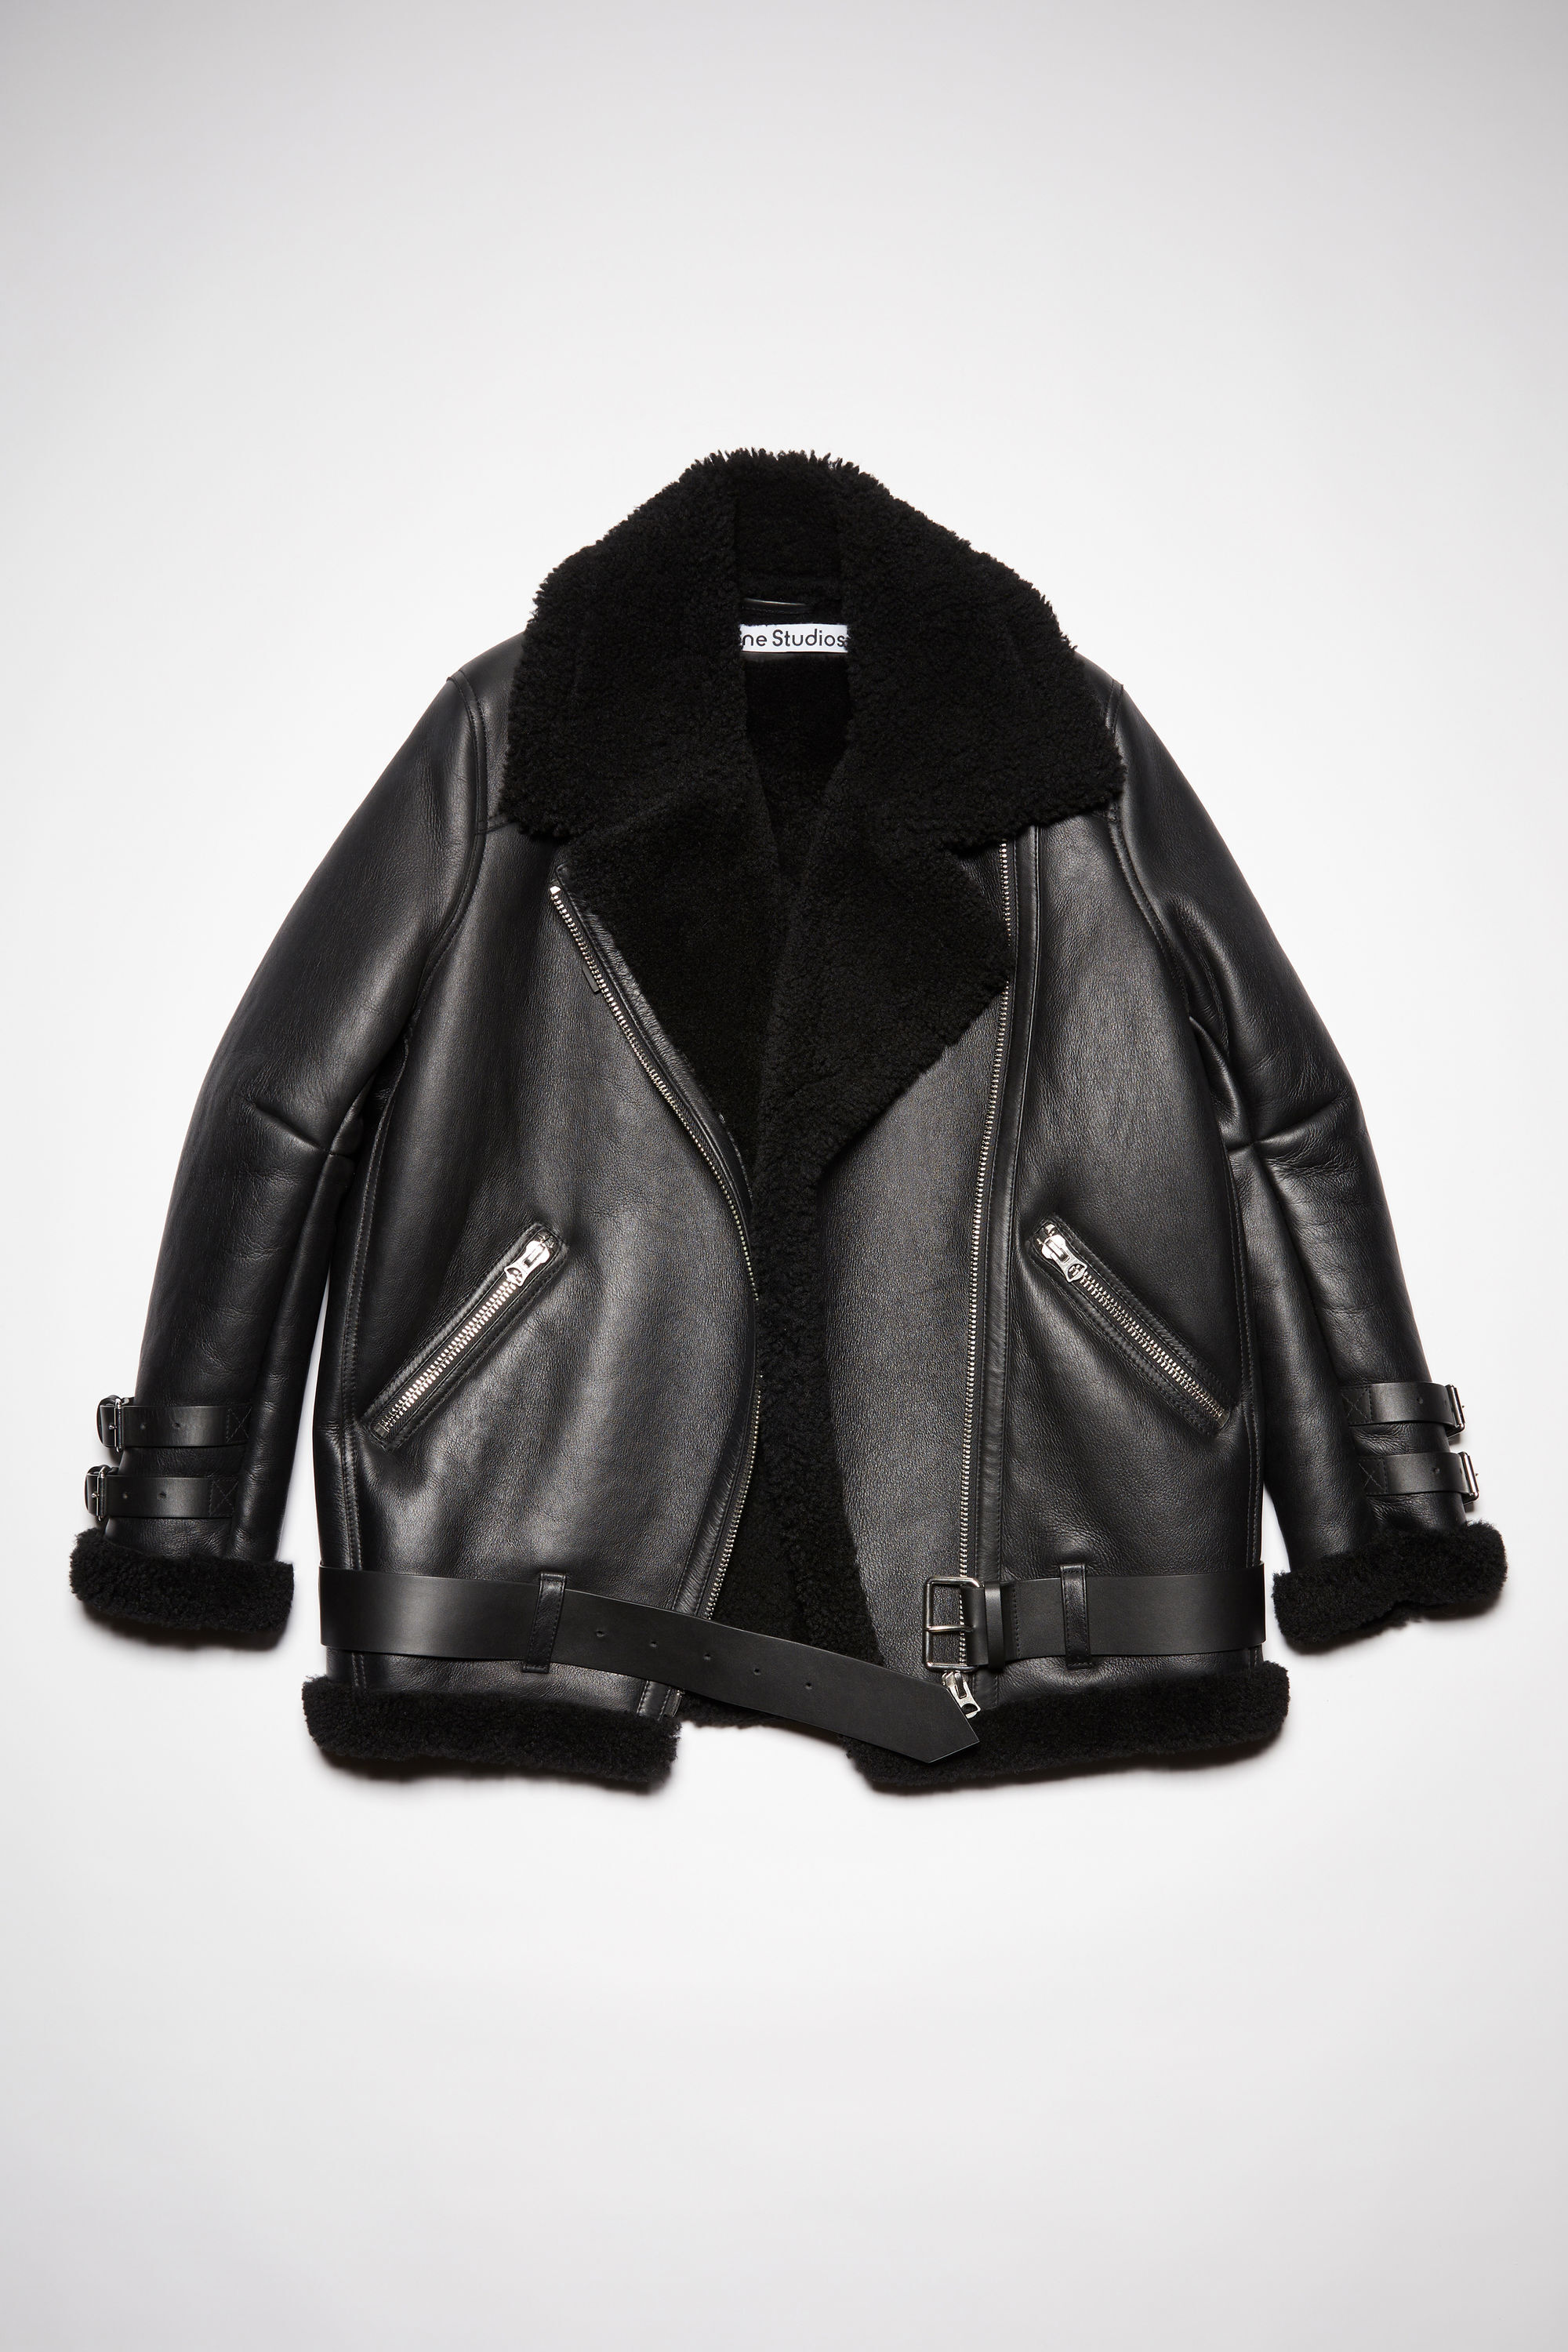 Acne Studios - Leather shearling jacket - Black / Black